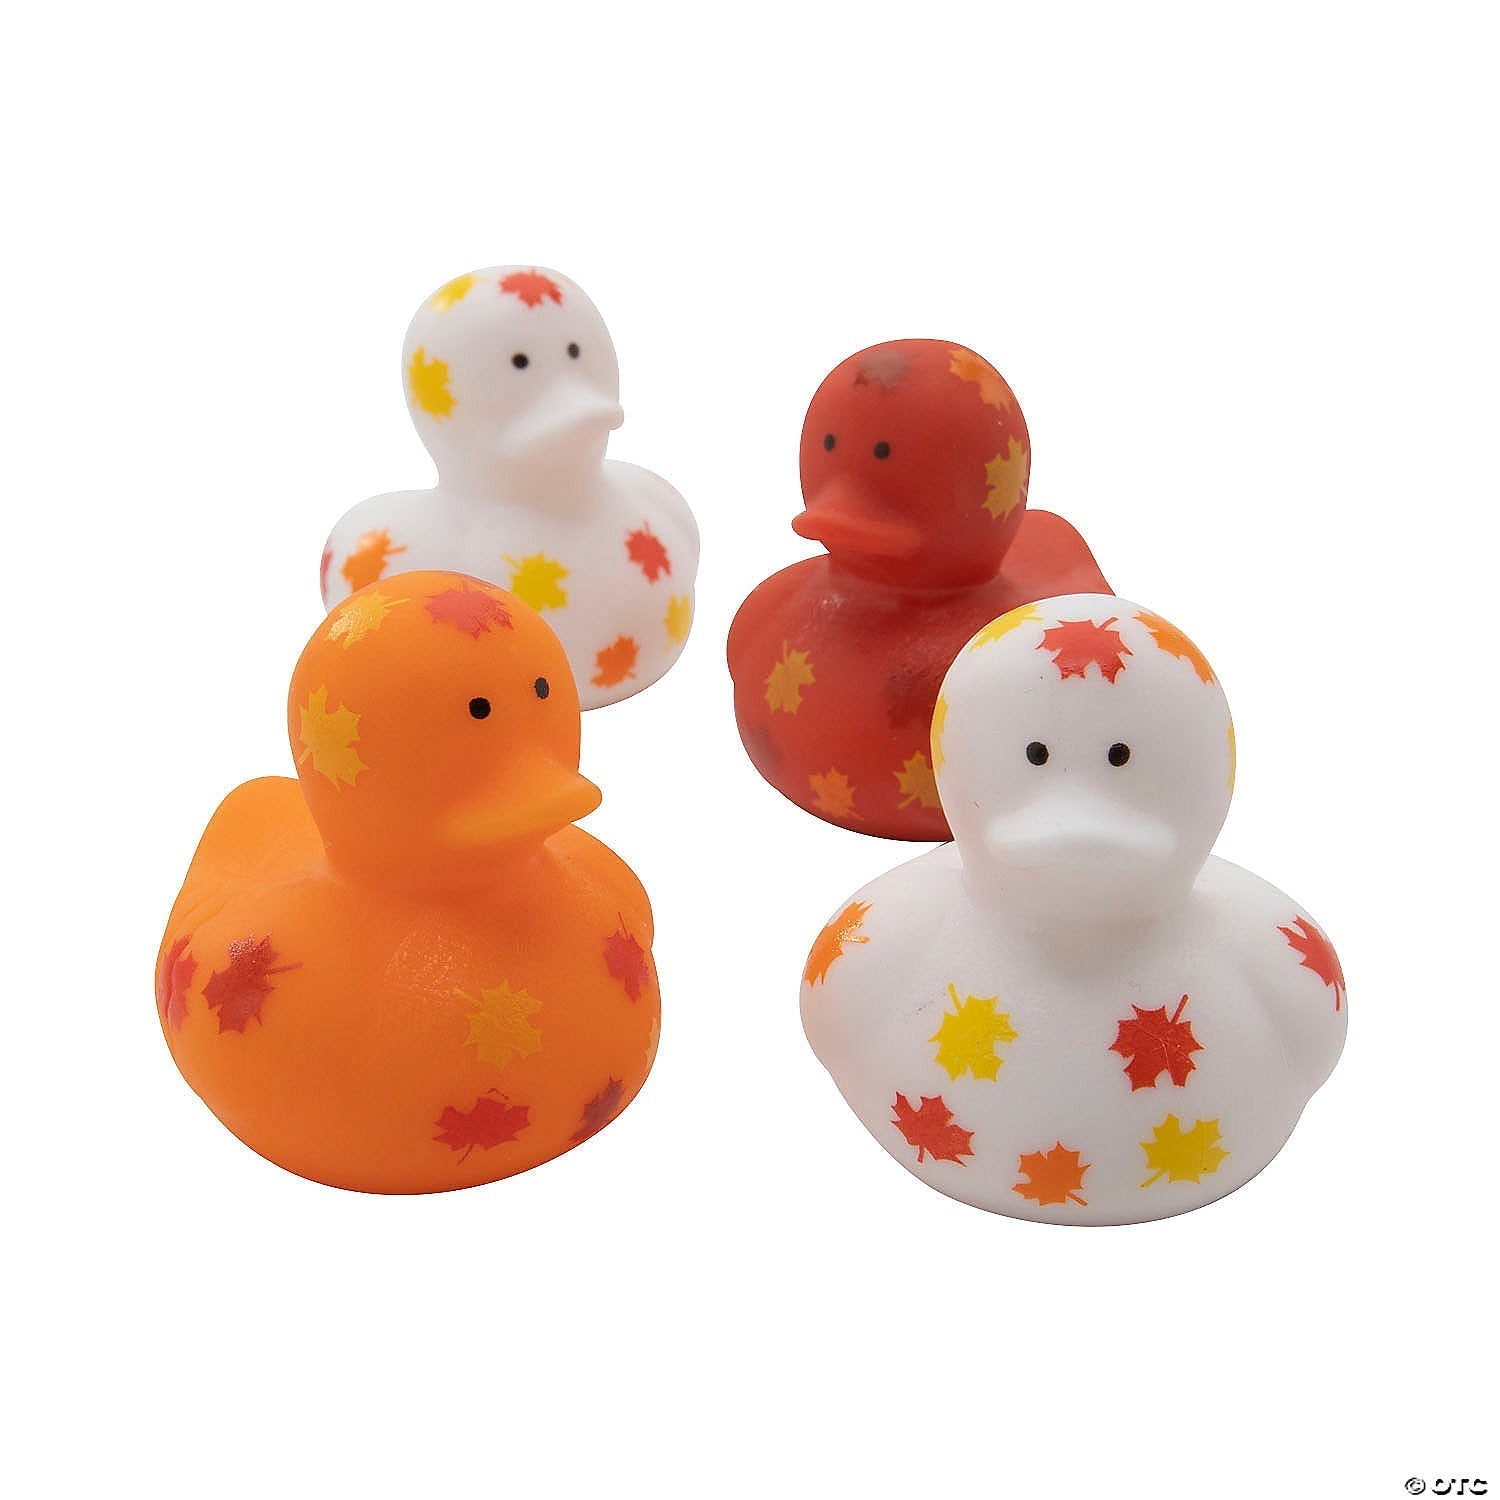  Yuronam 70 Pcs Tiny Ducks Mini Resin Ducks Miniature Ornaments  for Slime, Dollhouse, Garden Decoration(Yellow) : Toys & Games